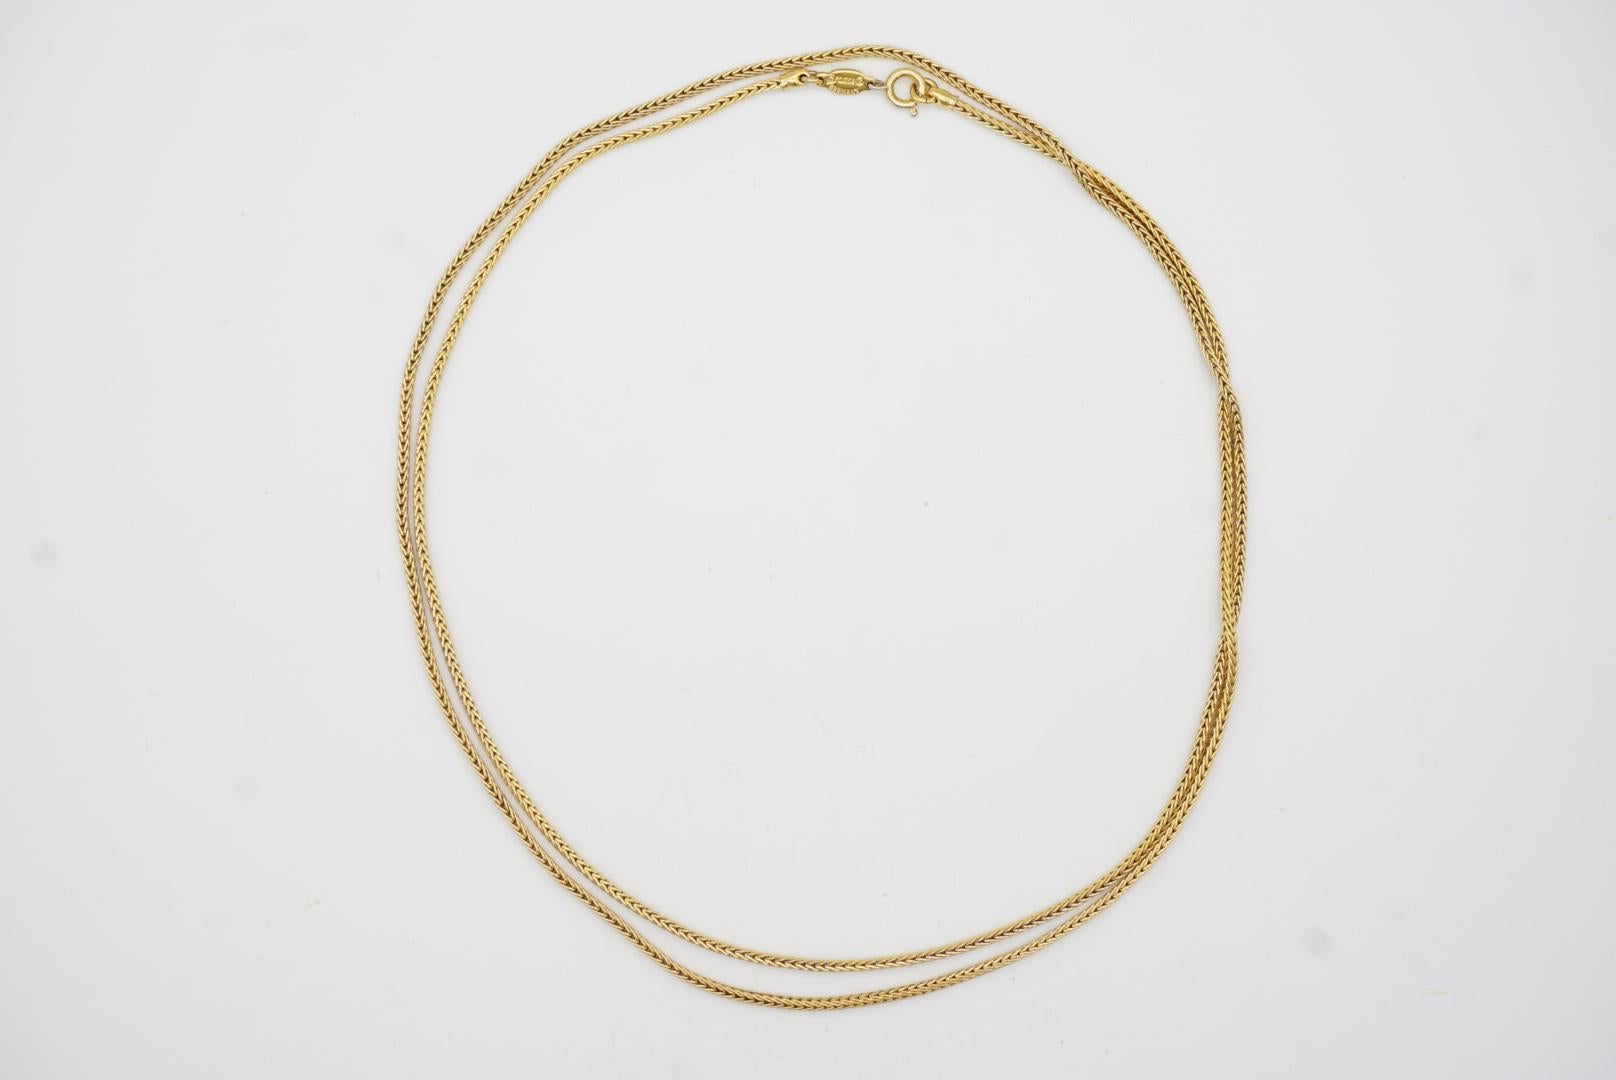 Christian Dior GROSSE Vintage Versatile Plain Trace Chain Gold Long Necklace For Sale 5